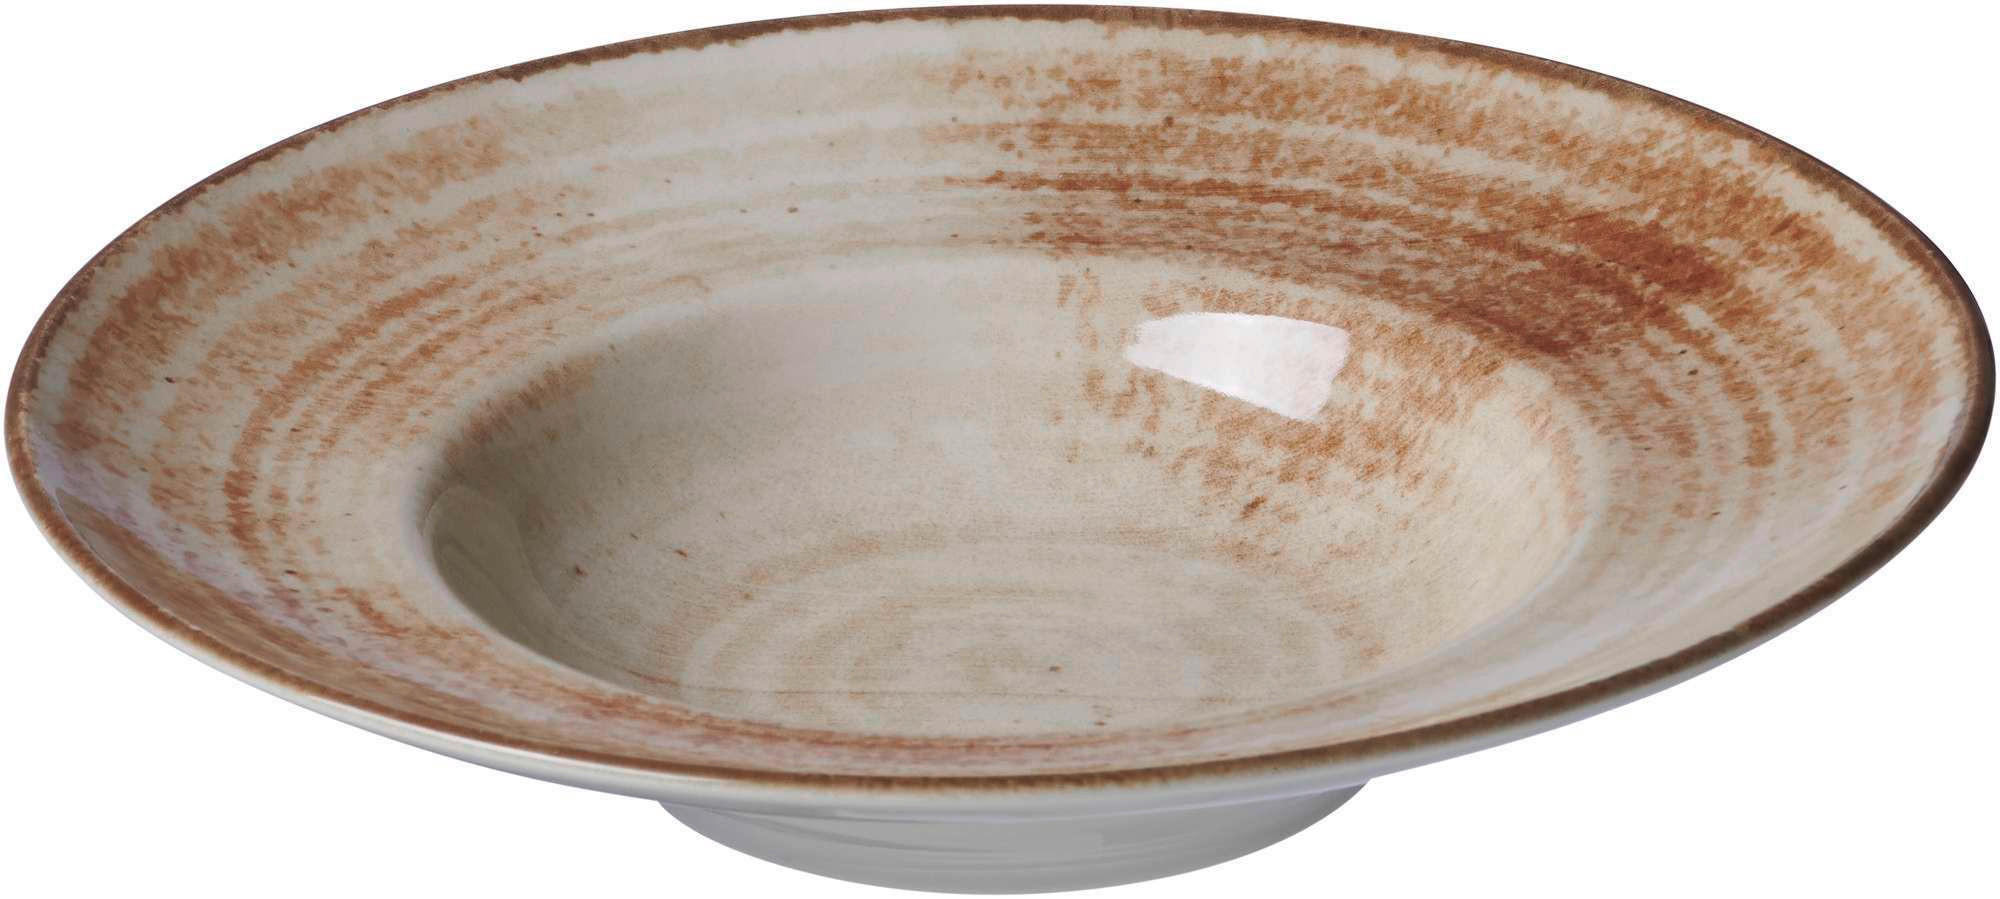 PASTATELLER Siena 27 cm  - Beige/Braun, Basics, Keramik (27cm) - Ritzenhoff Breker